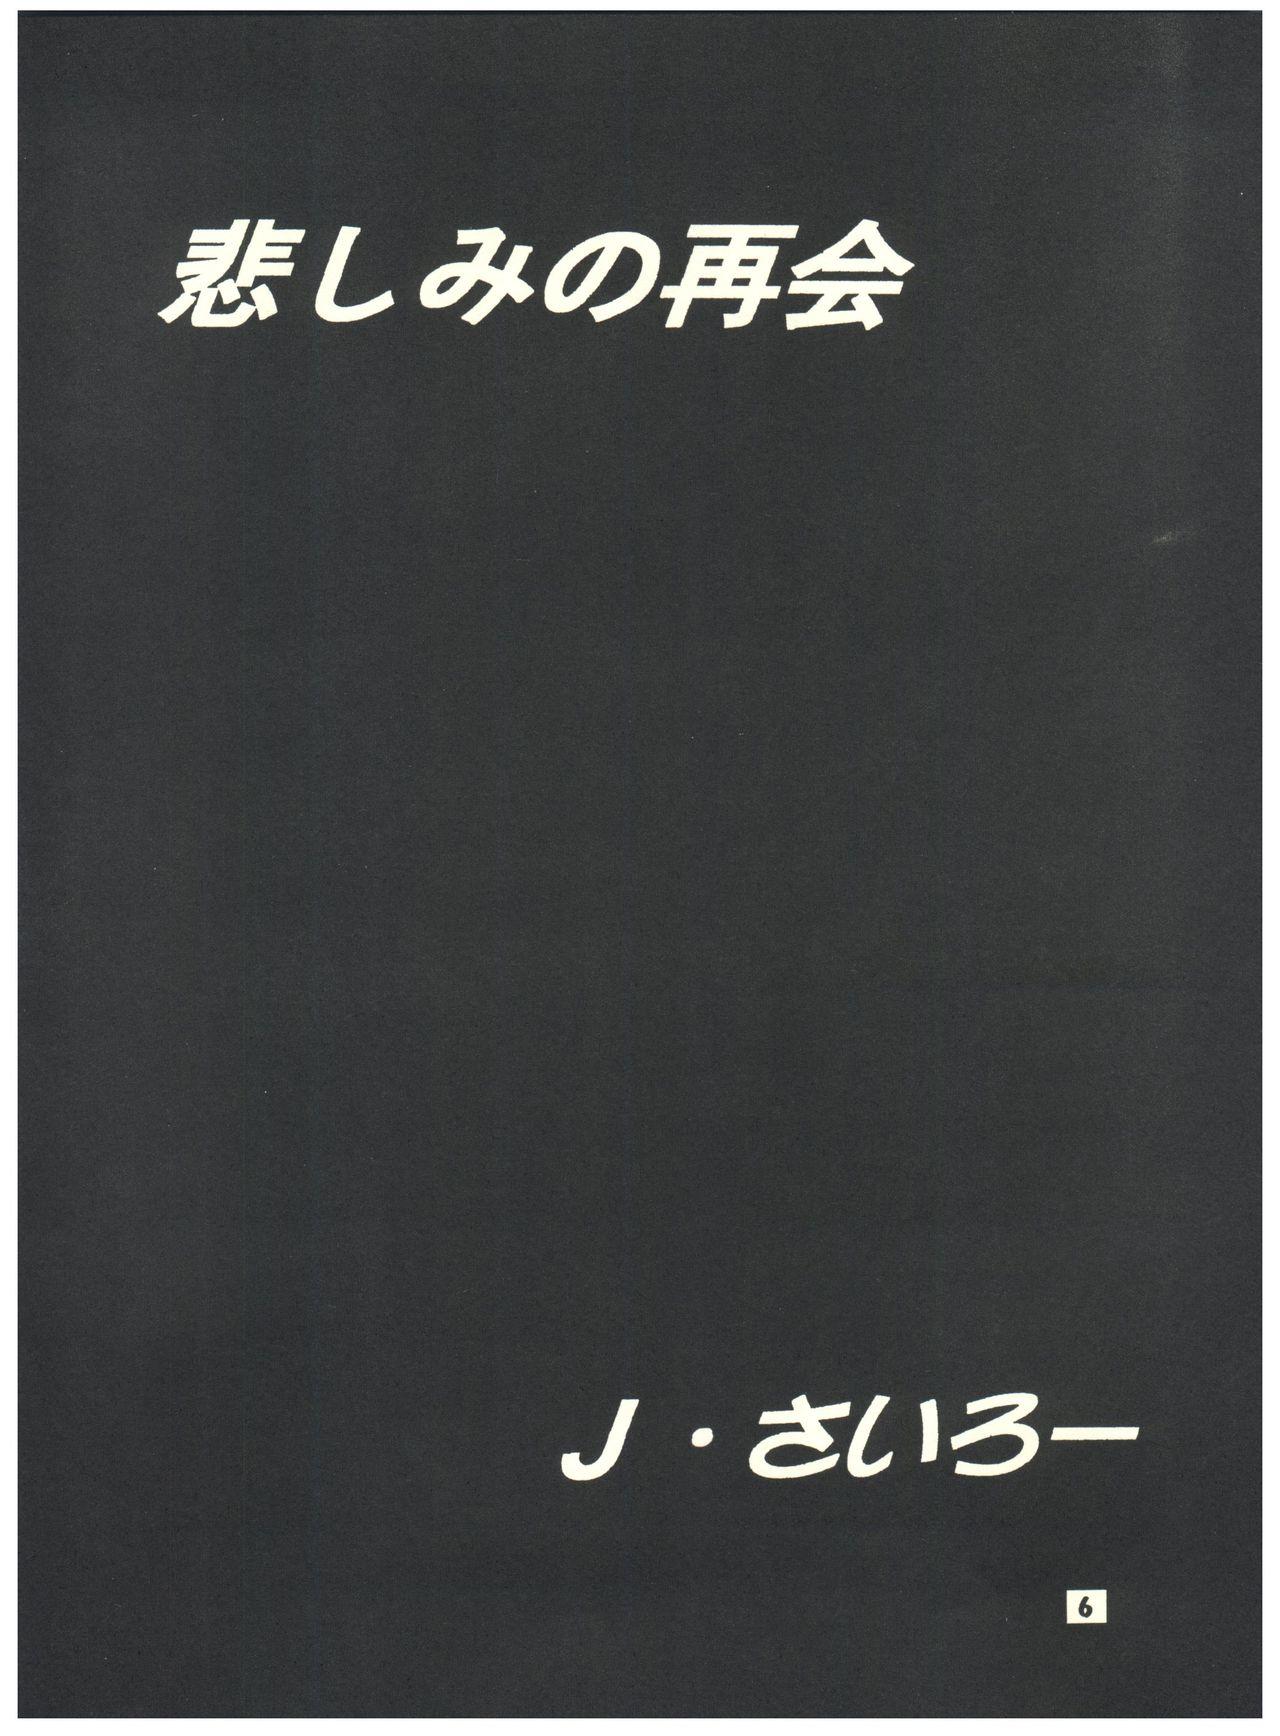 Hardsex [Sairo Publishing (J. Sairo) En-Jack 2 (Various) - Samurai spirits Saint tail Mizuiro jidai Remi nobodys girl Tites - Page 6